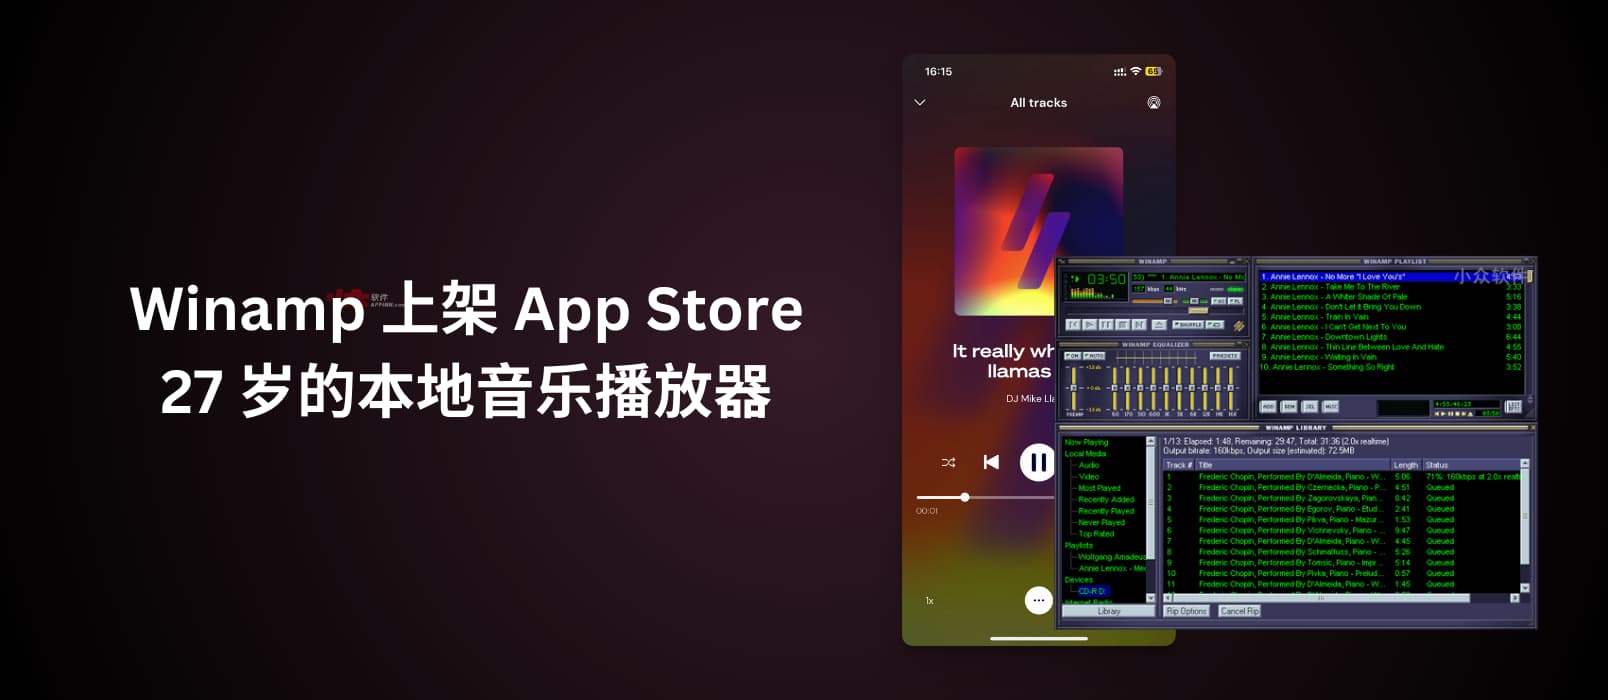 Winamp 正式上架 App Store，27 岁的本地音乐播放器，没有更换皮肤功能